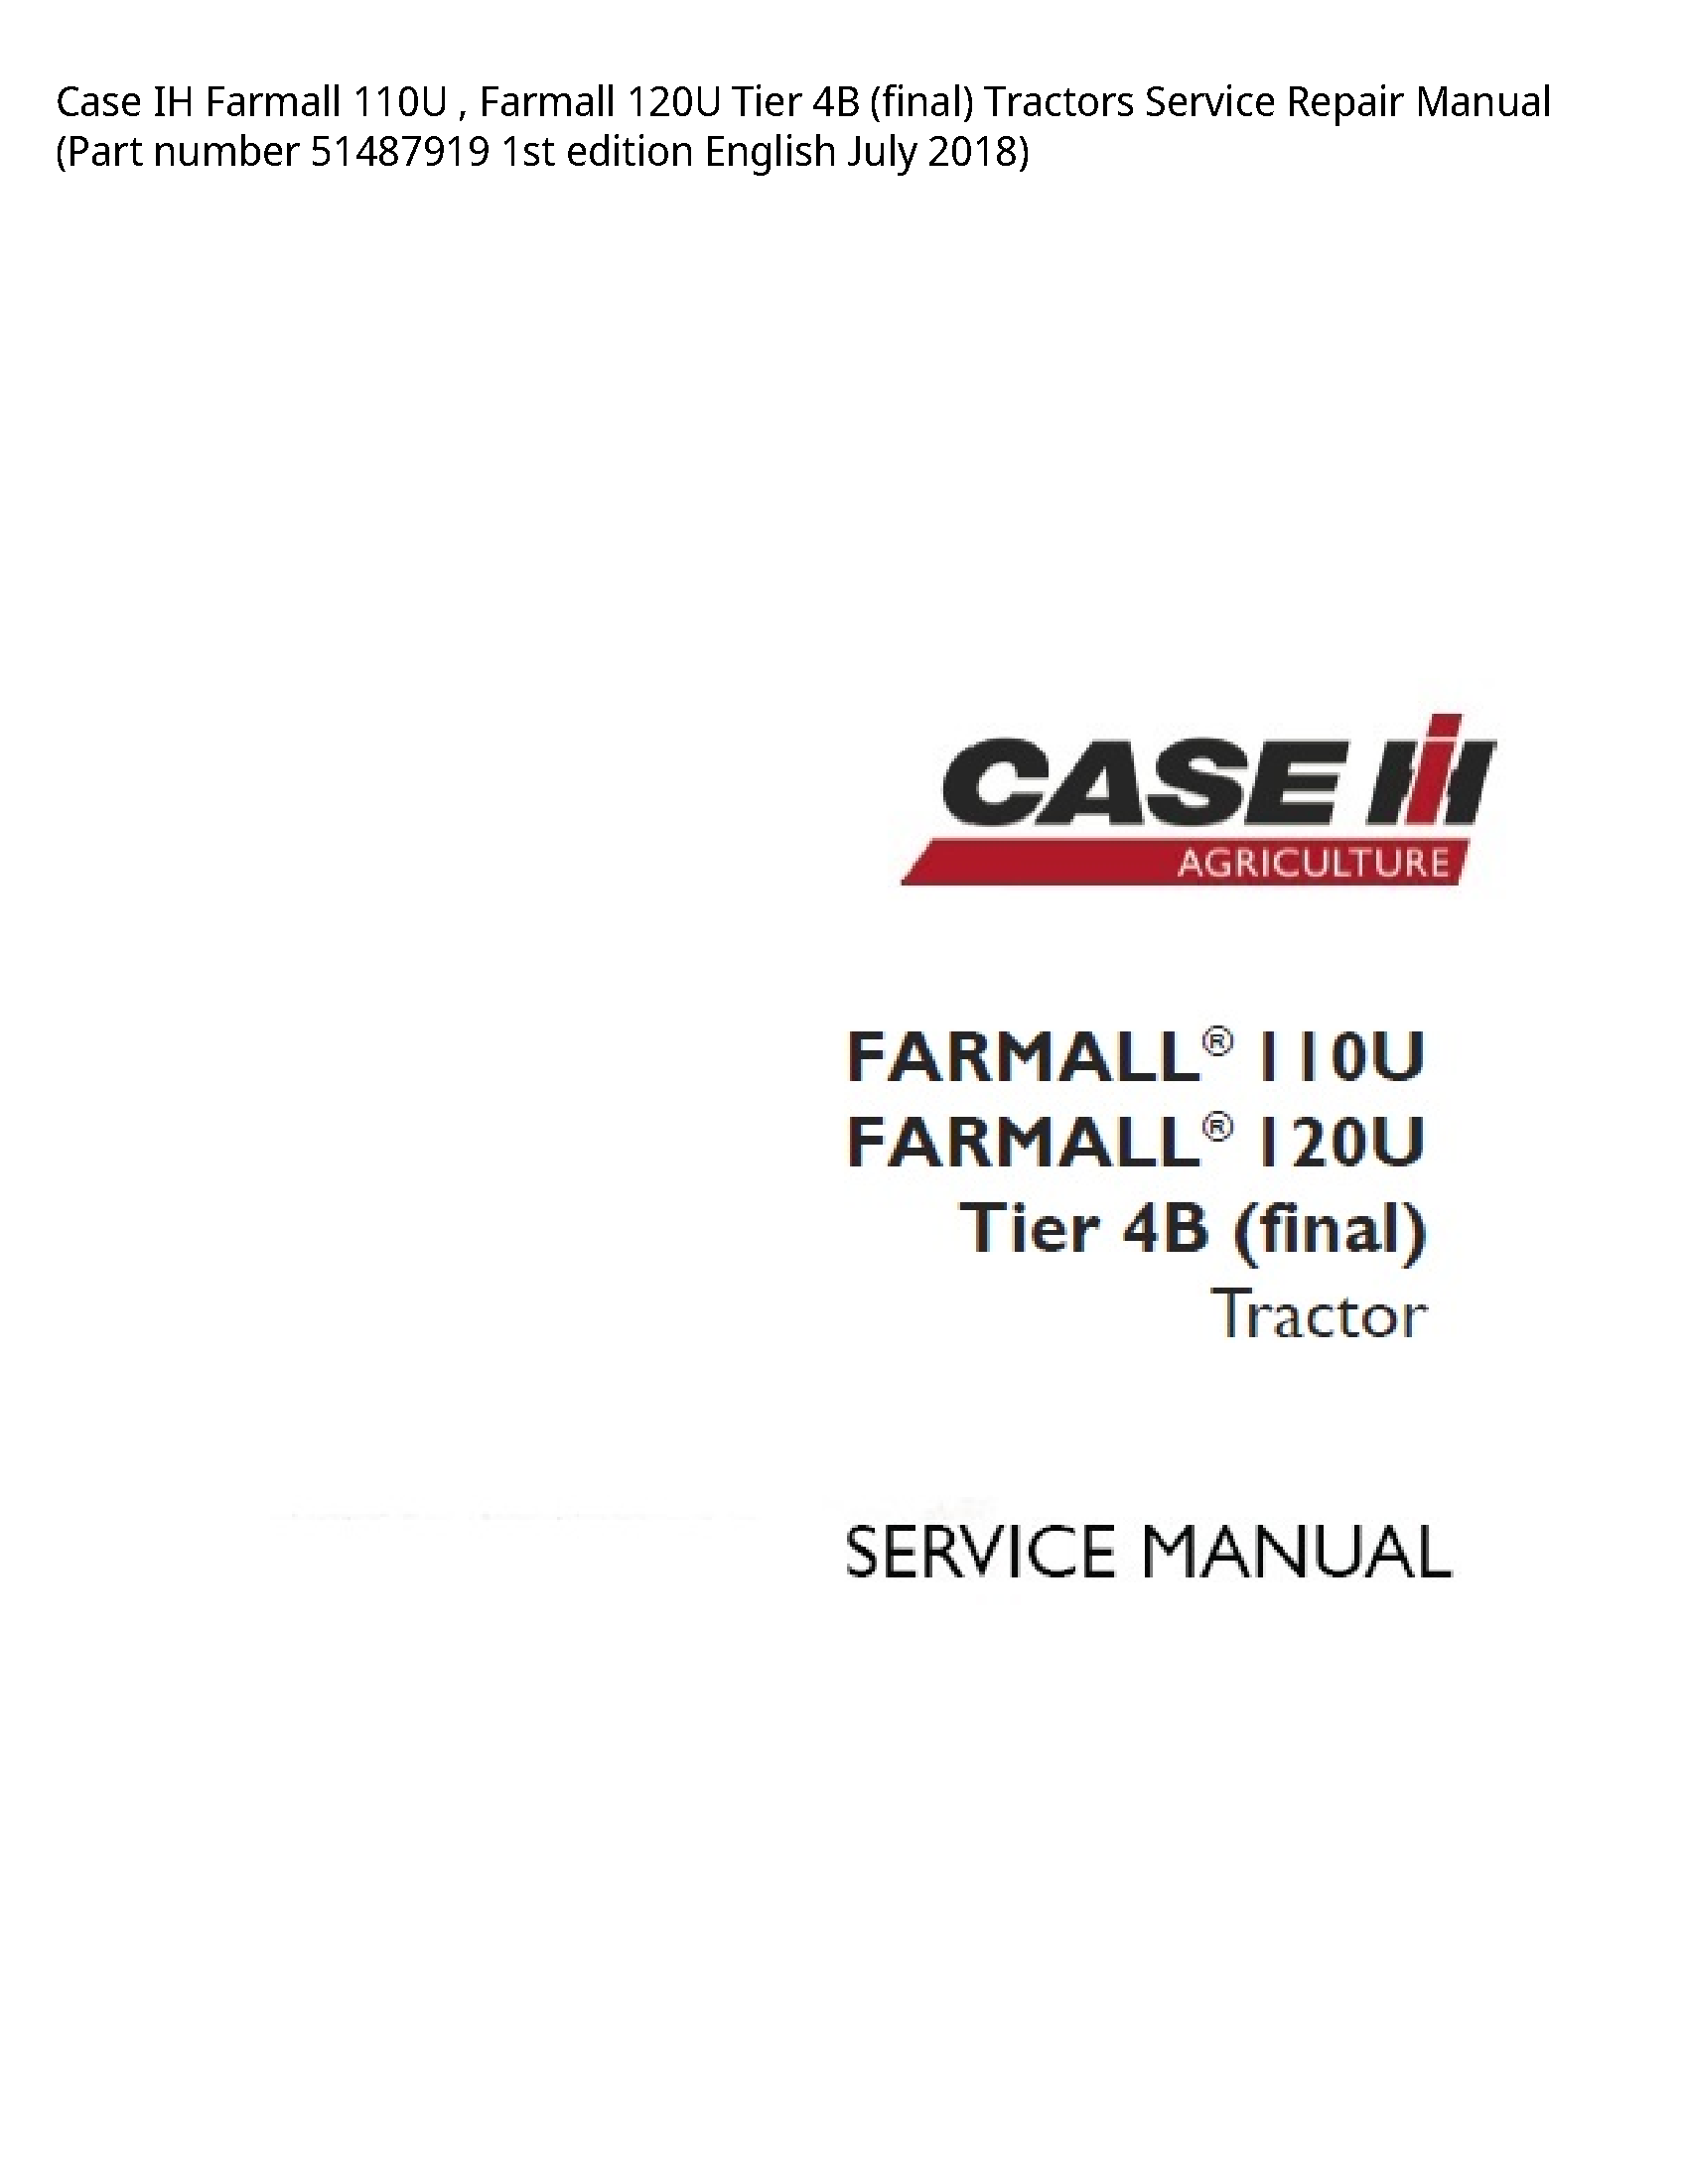 Case/Case IH 110U IH Farmall Farmall Tier (final) Tractors manual